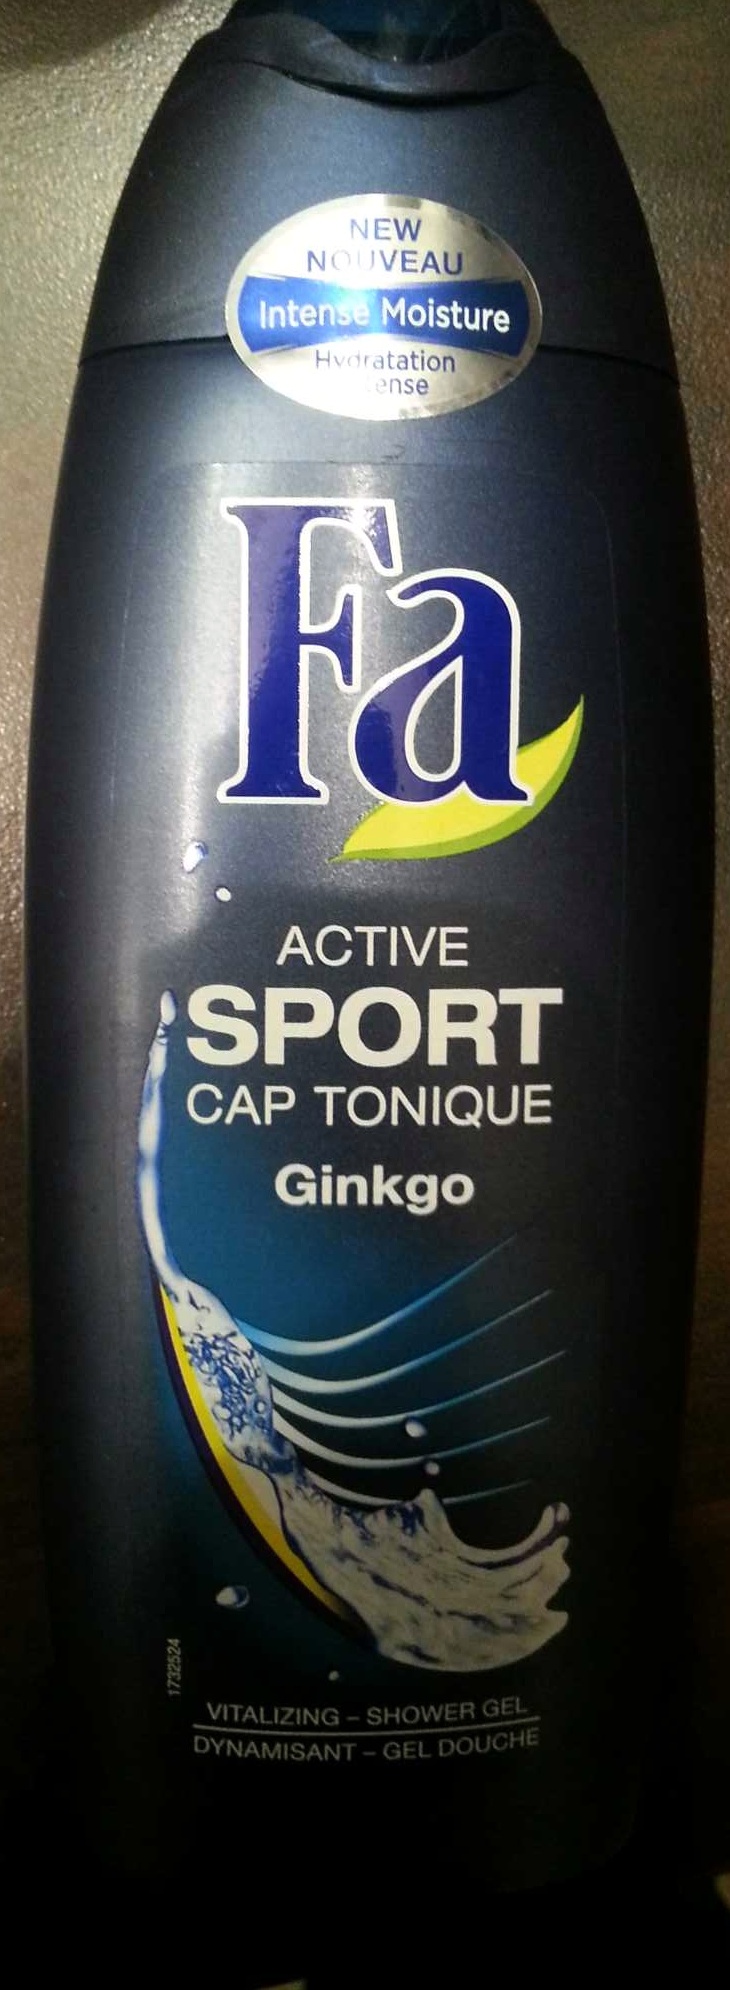 Active sport cap tonique Ginkgo - Product - fr